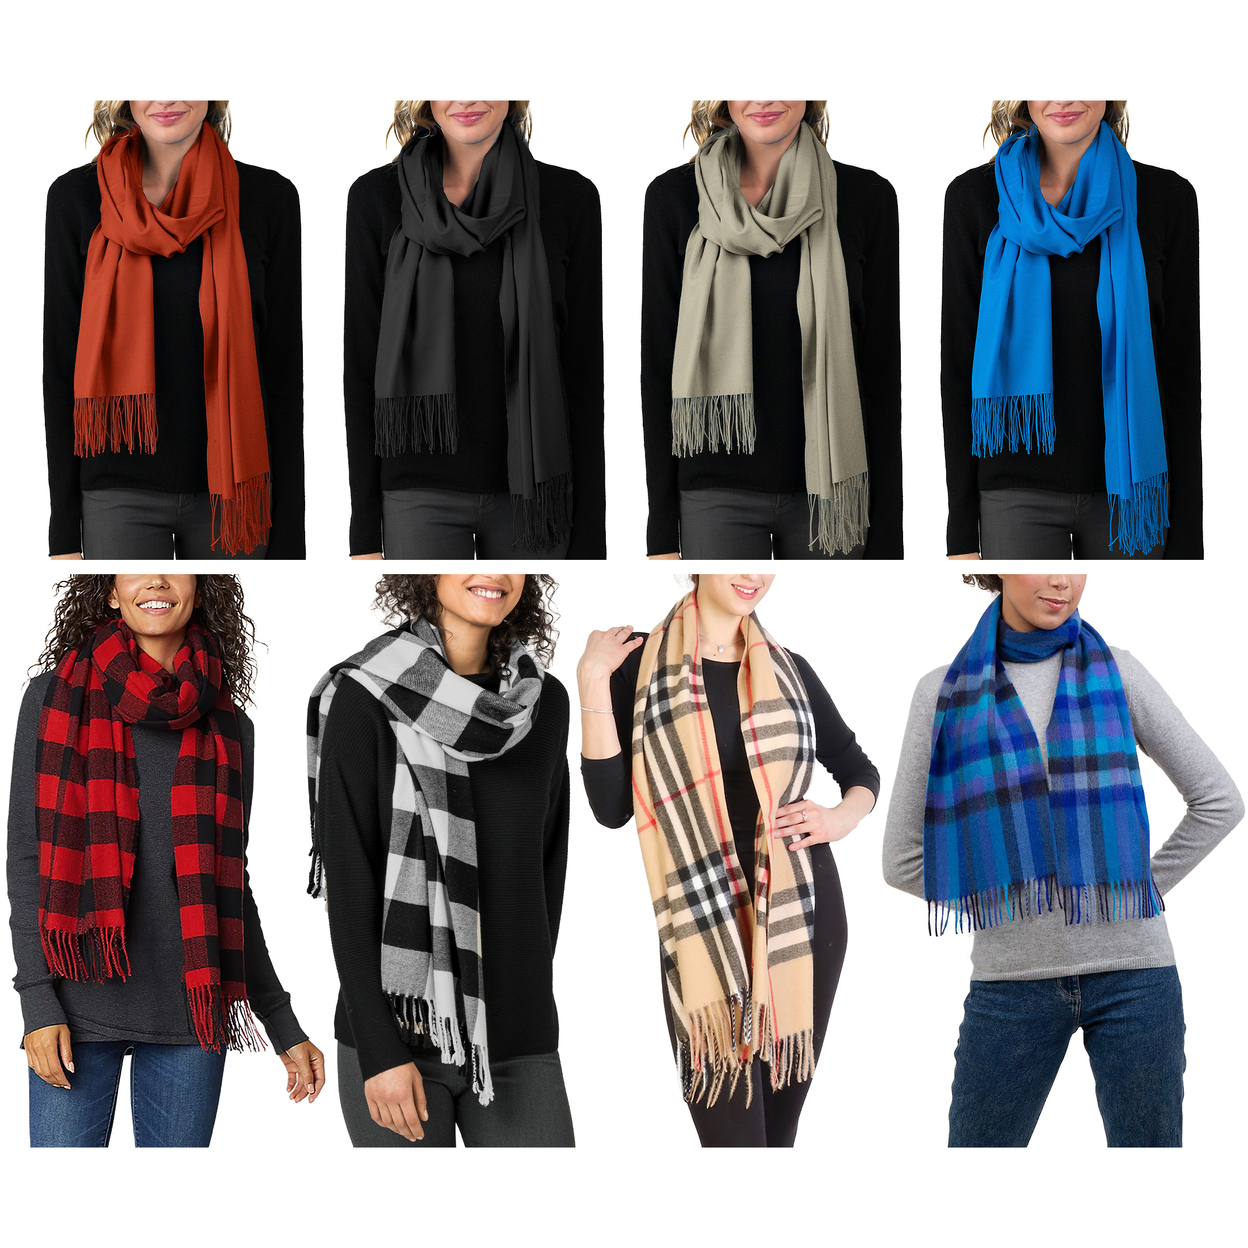 4-Pack: Women's Ultra Soft Neutral & Bright Cashmere Feel Winter Warm Scarfs - Bright